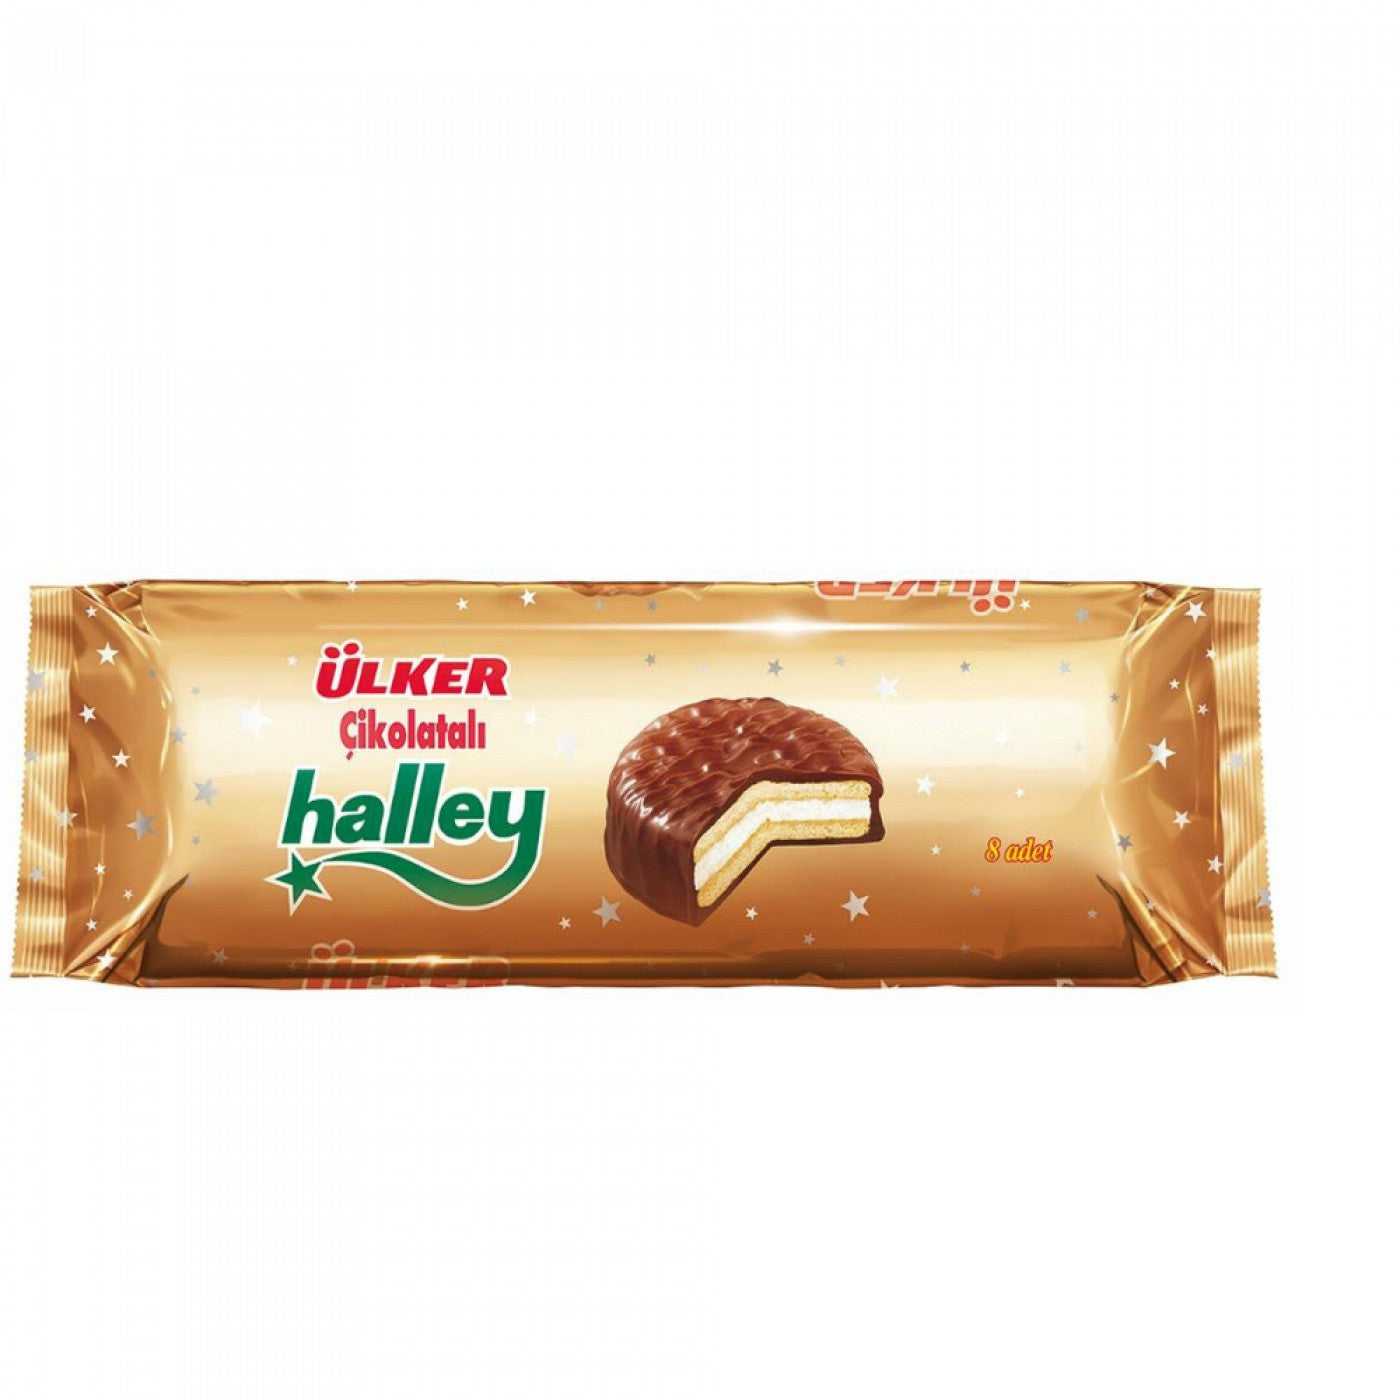 ULKER CHOCOLATE HALLEY 8 P.c